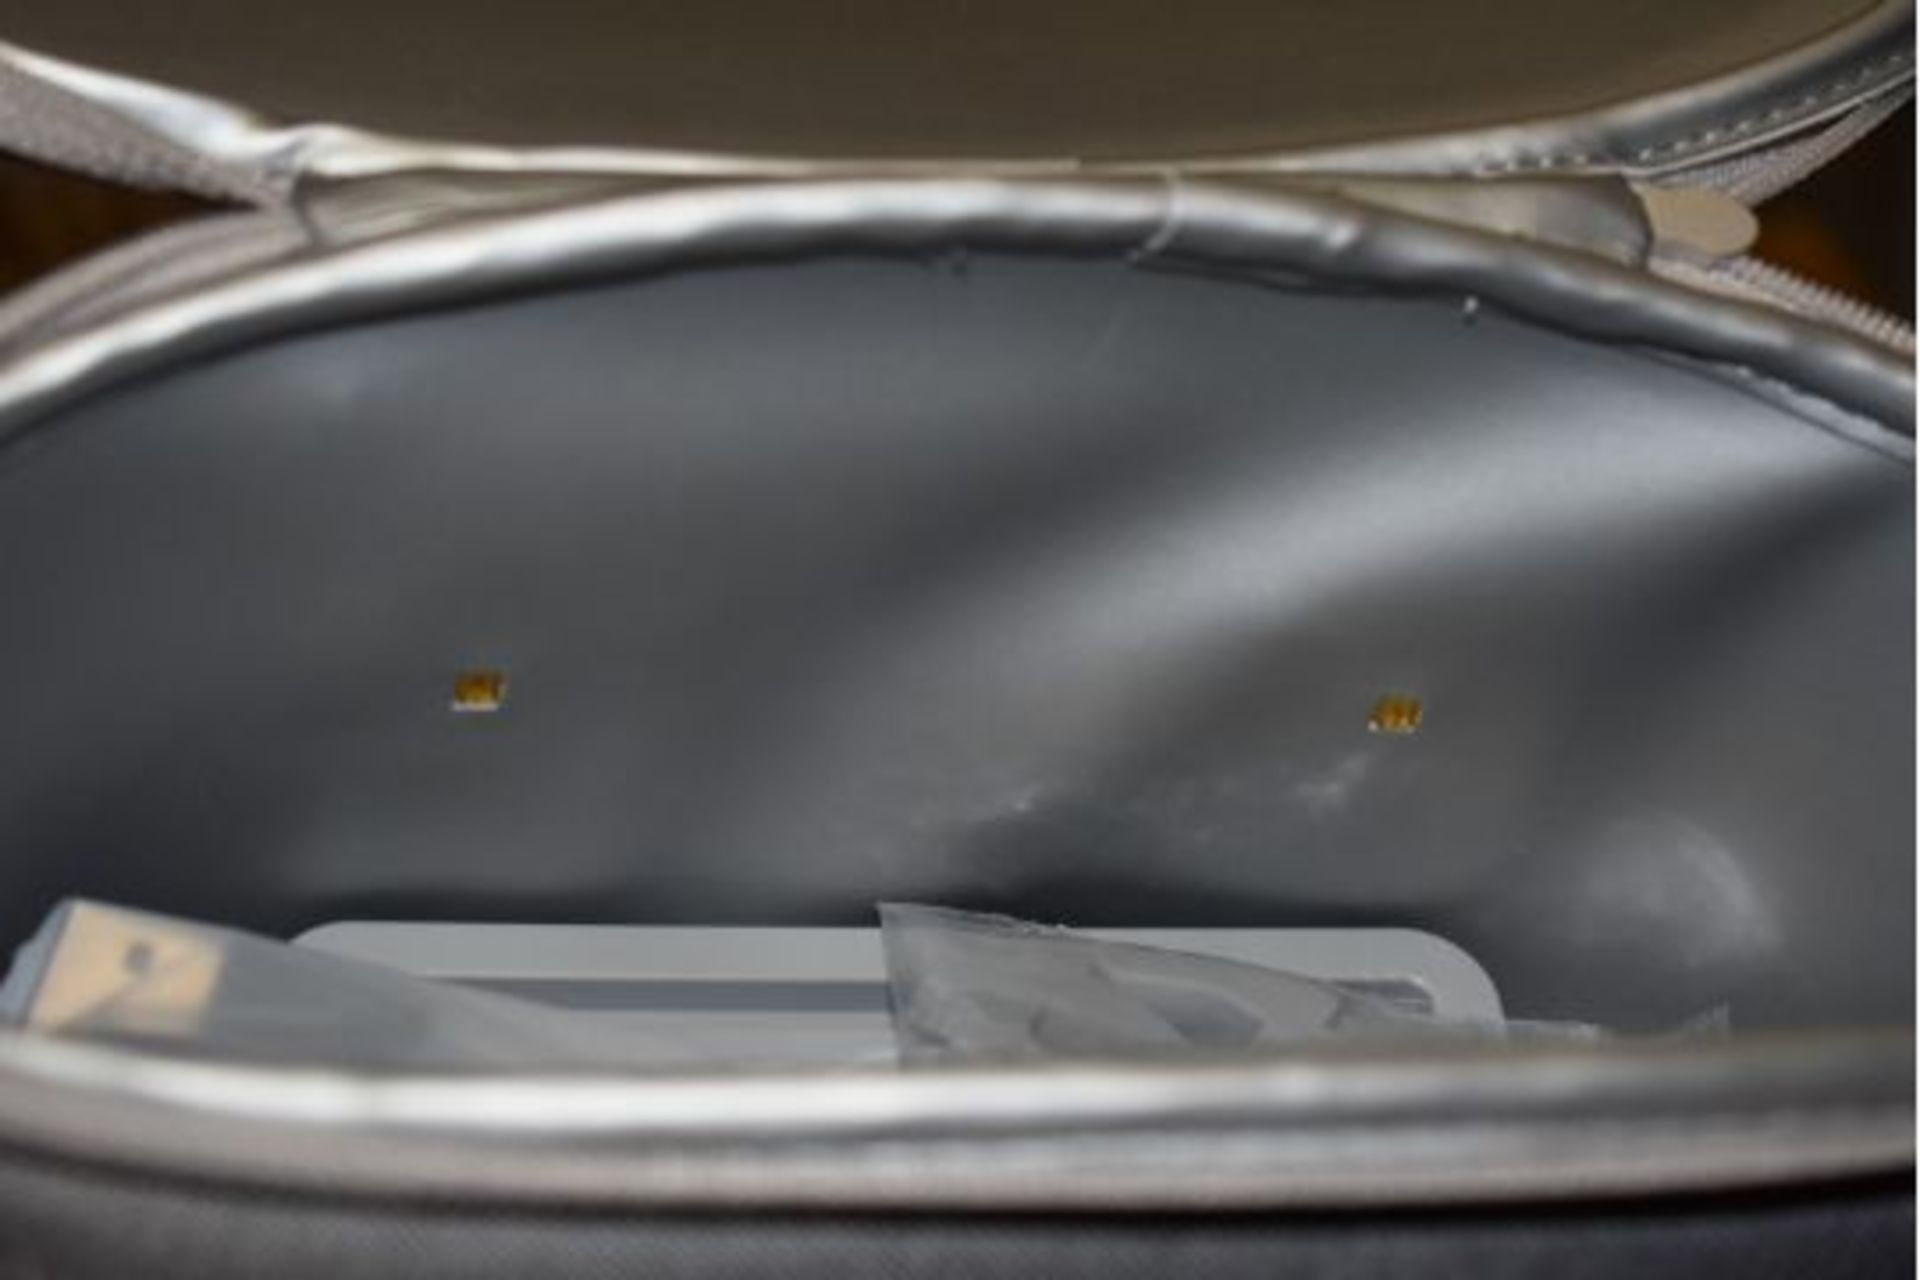 1 x Homedics UV Clean Portable Sanitiser Bag - Kills Upto 99.9% of Bacteria & Viruses in Just 60 - Image 11 of 24